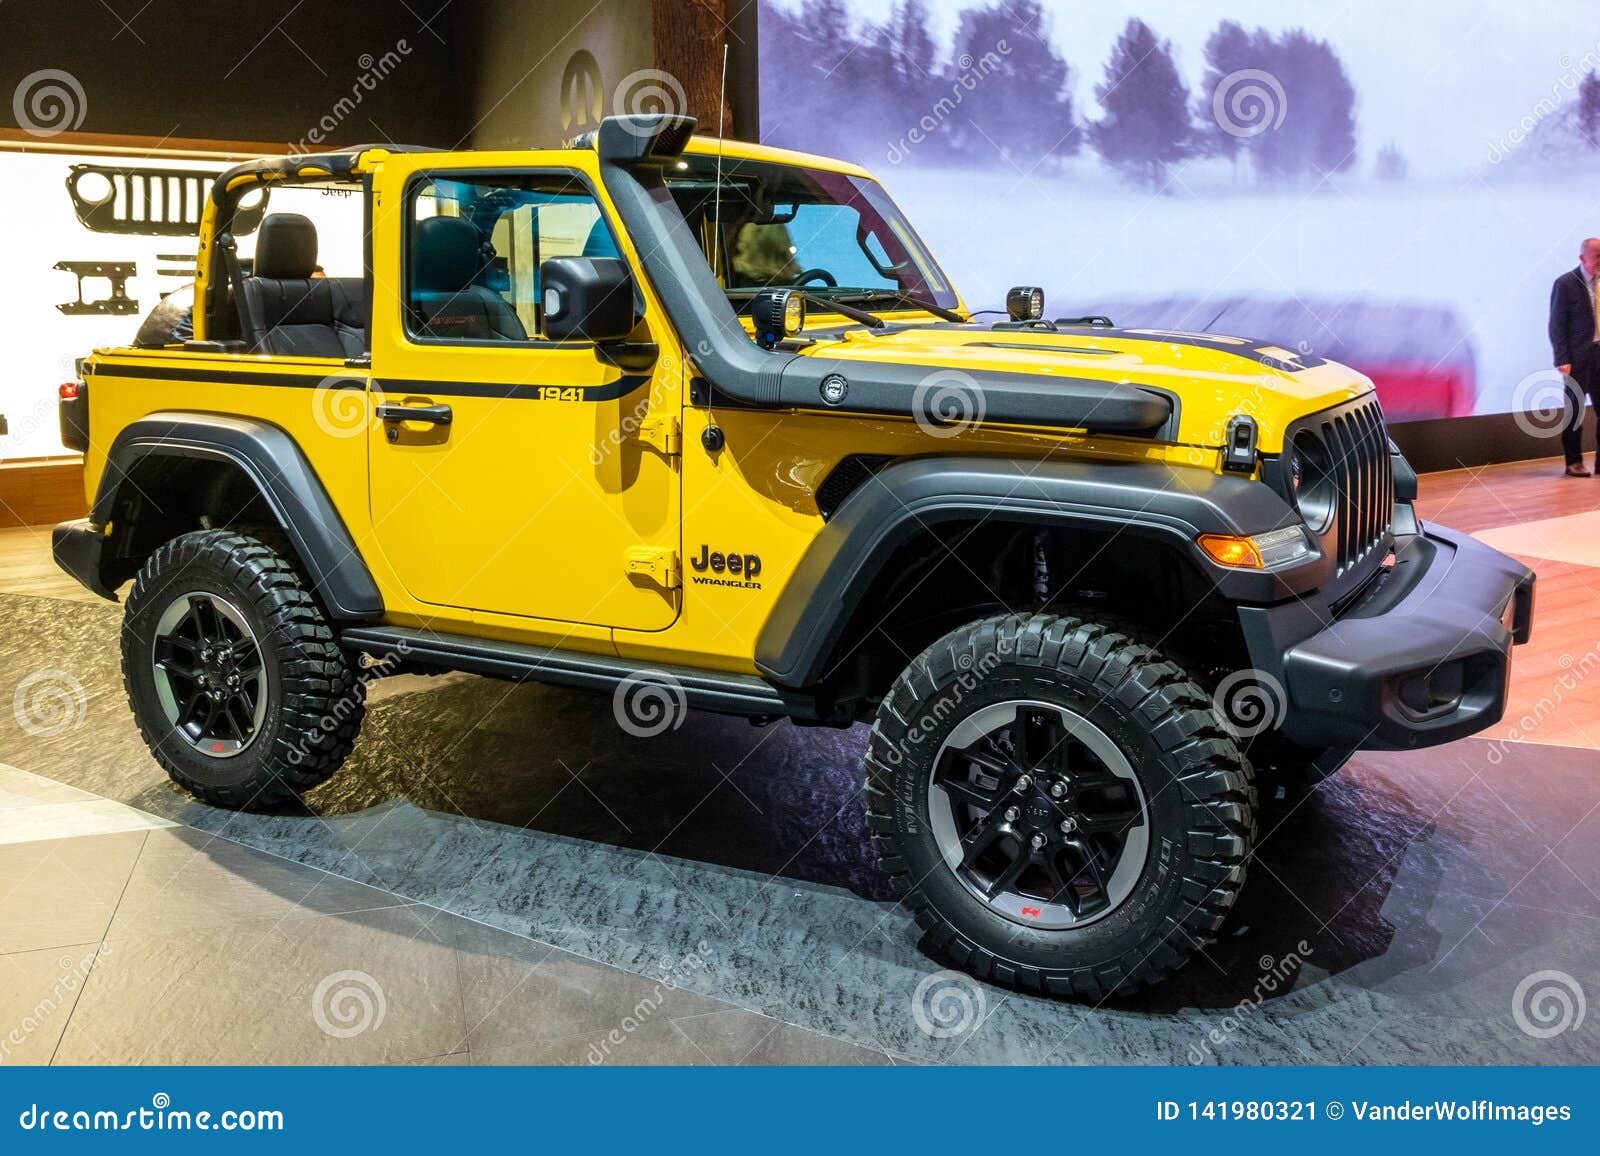 Jeep Wrangler Rubicon 4x4 Car Editorial Photo - Image of wrangler, yellow:  141980321